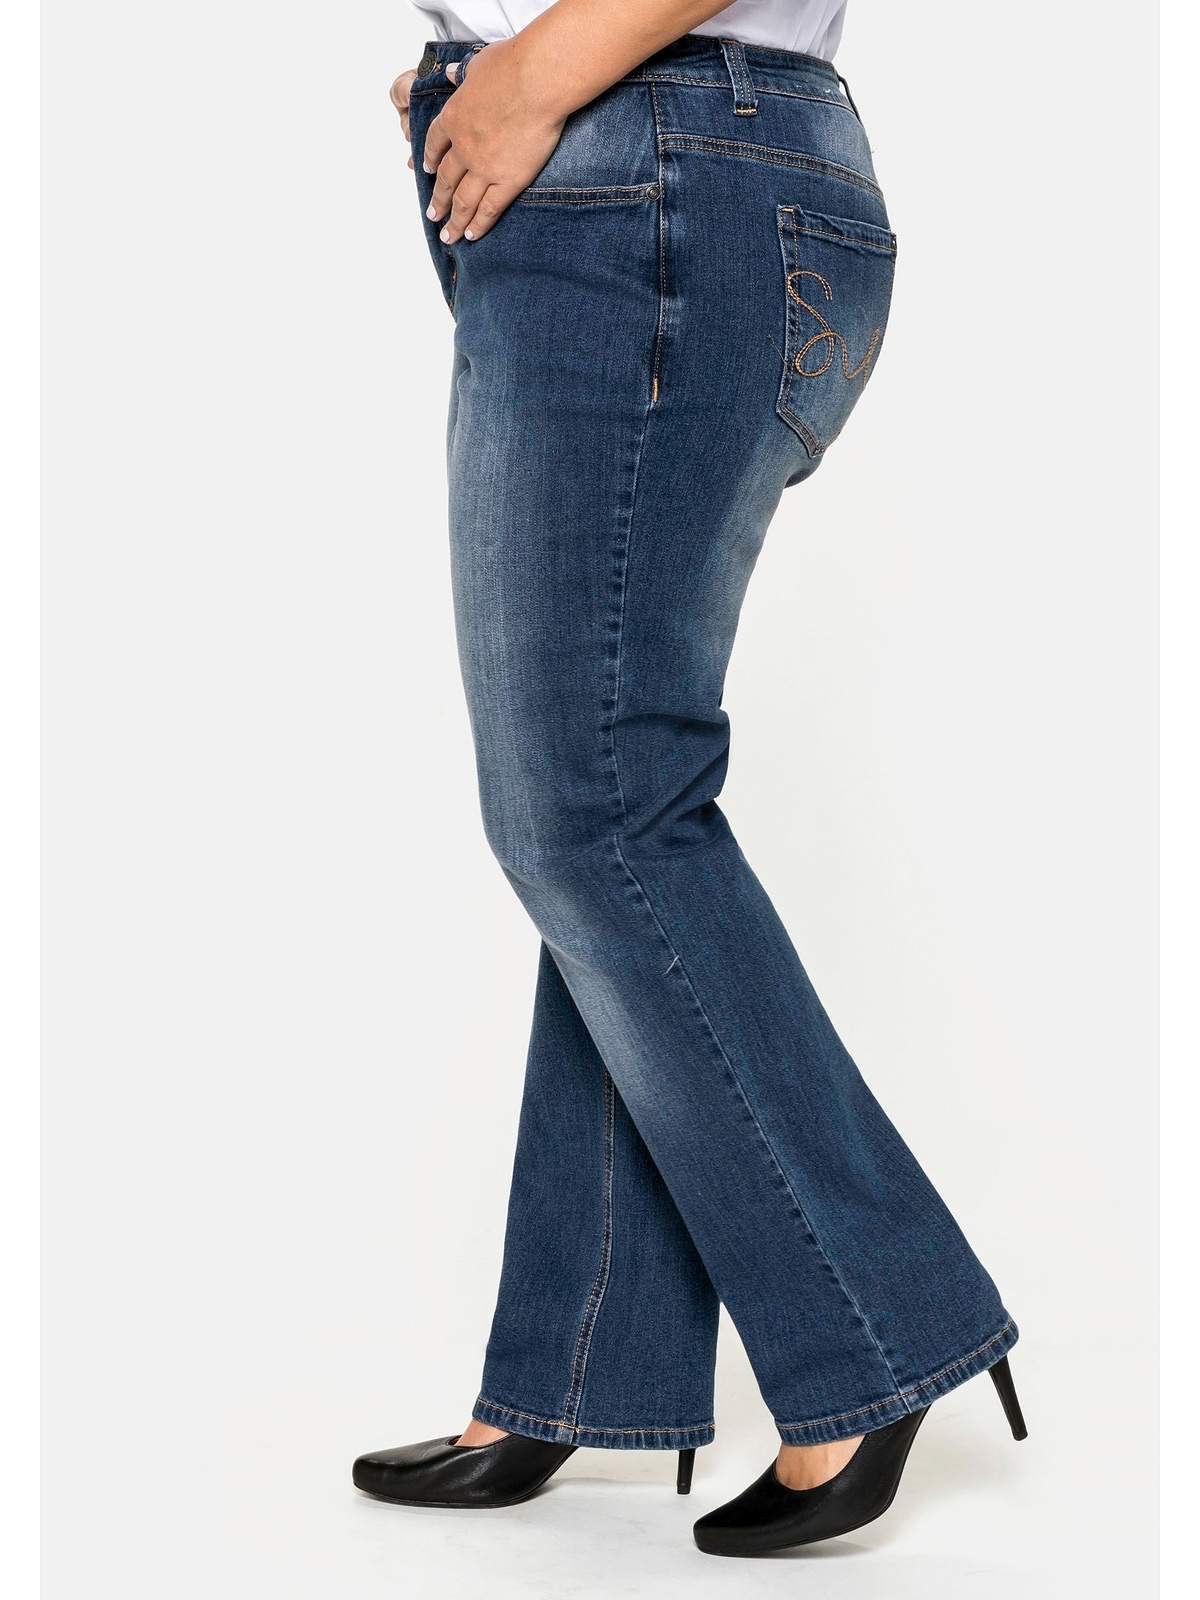 Stretch-Jeans Größen«, Bauch-weg-Effekt Sheego shoppen »Große